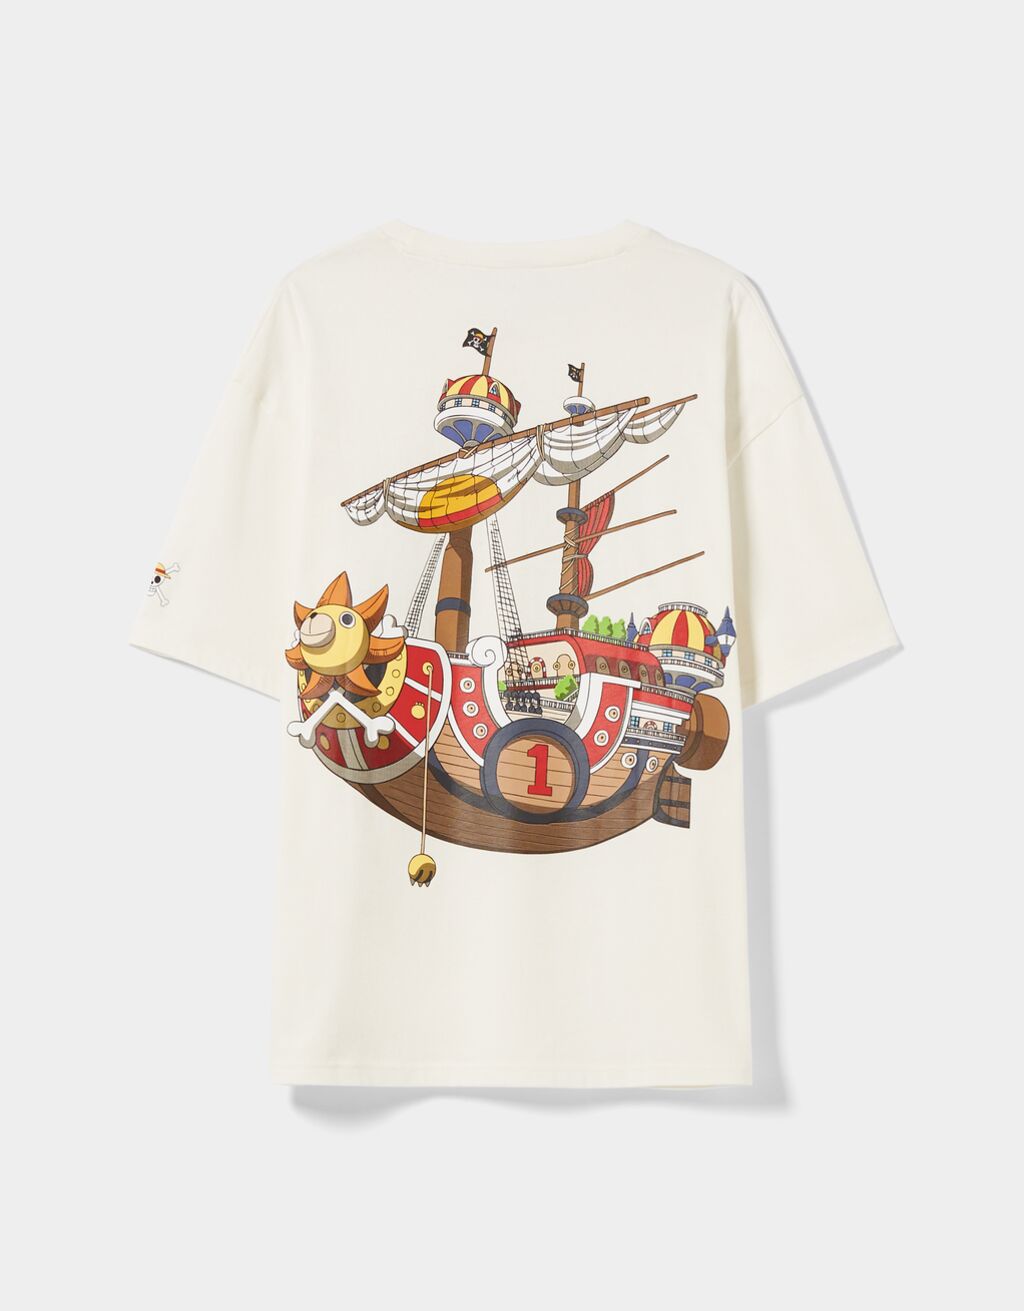 One Piece kısa kollu middle fit t-shirt